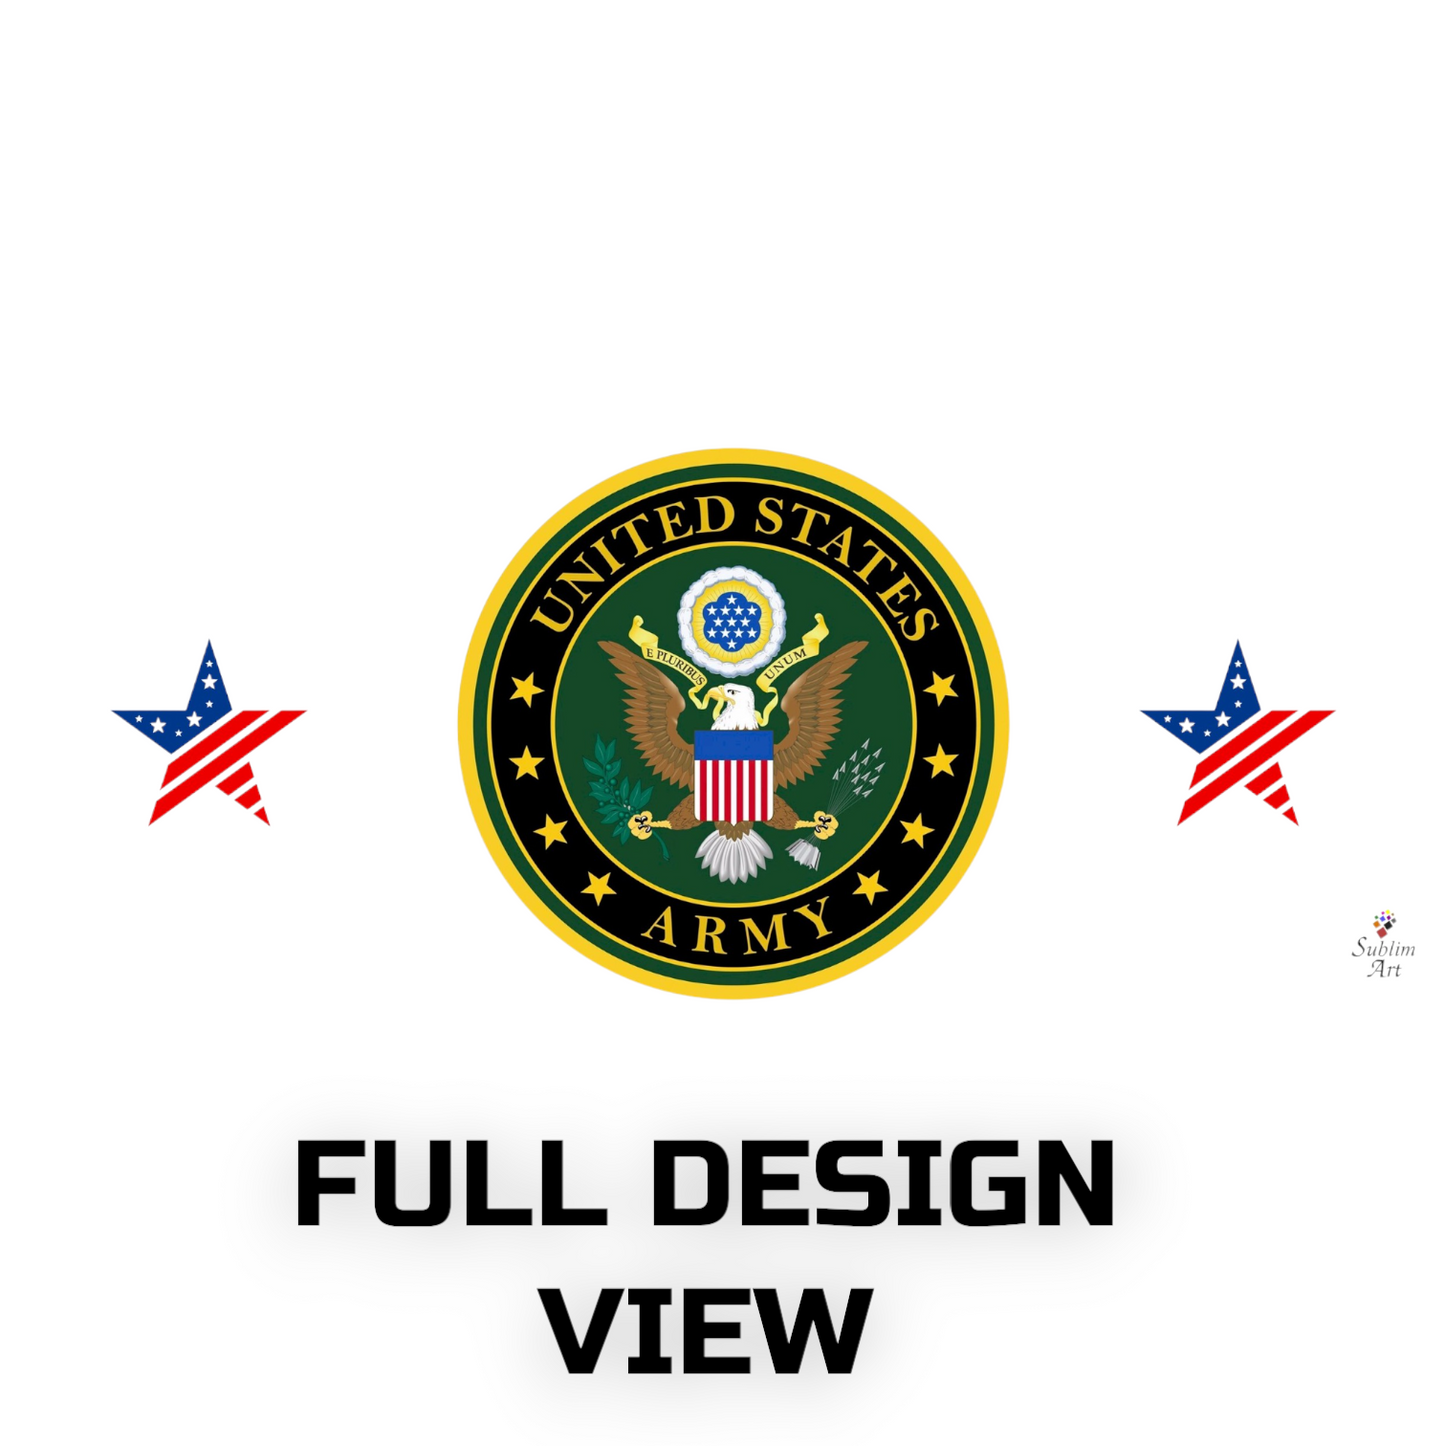 SUBLIMART: Veteran - Mug 'Department of the Navy' (Design #09)